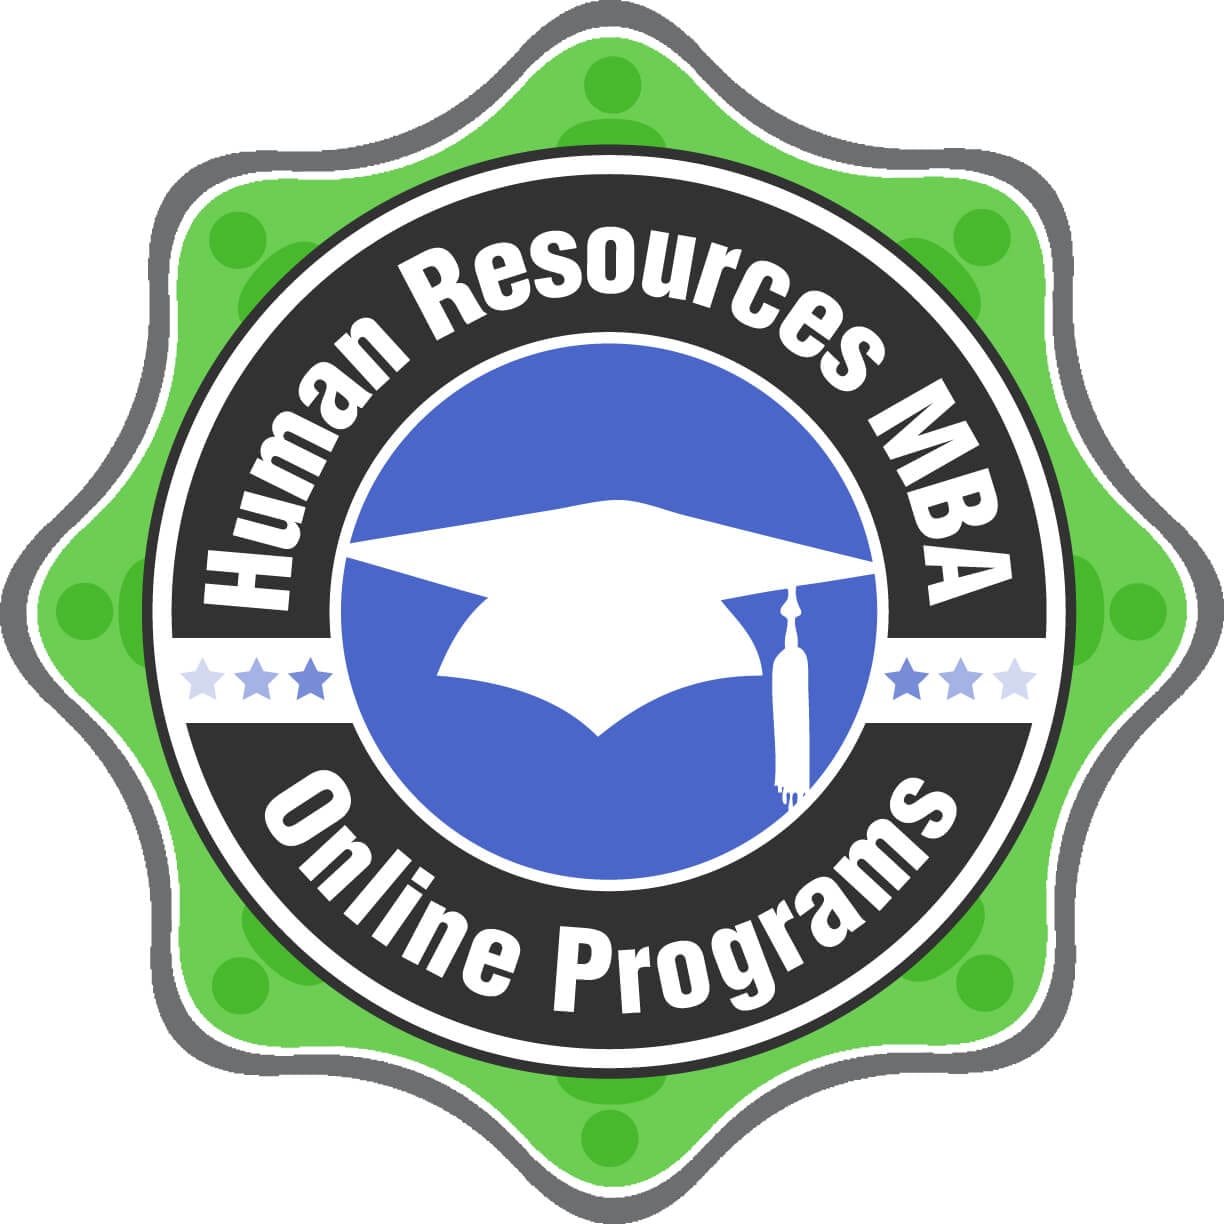 Human Resources Development Graduate Programs